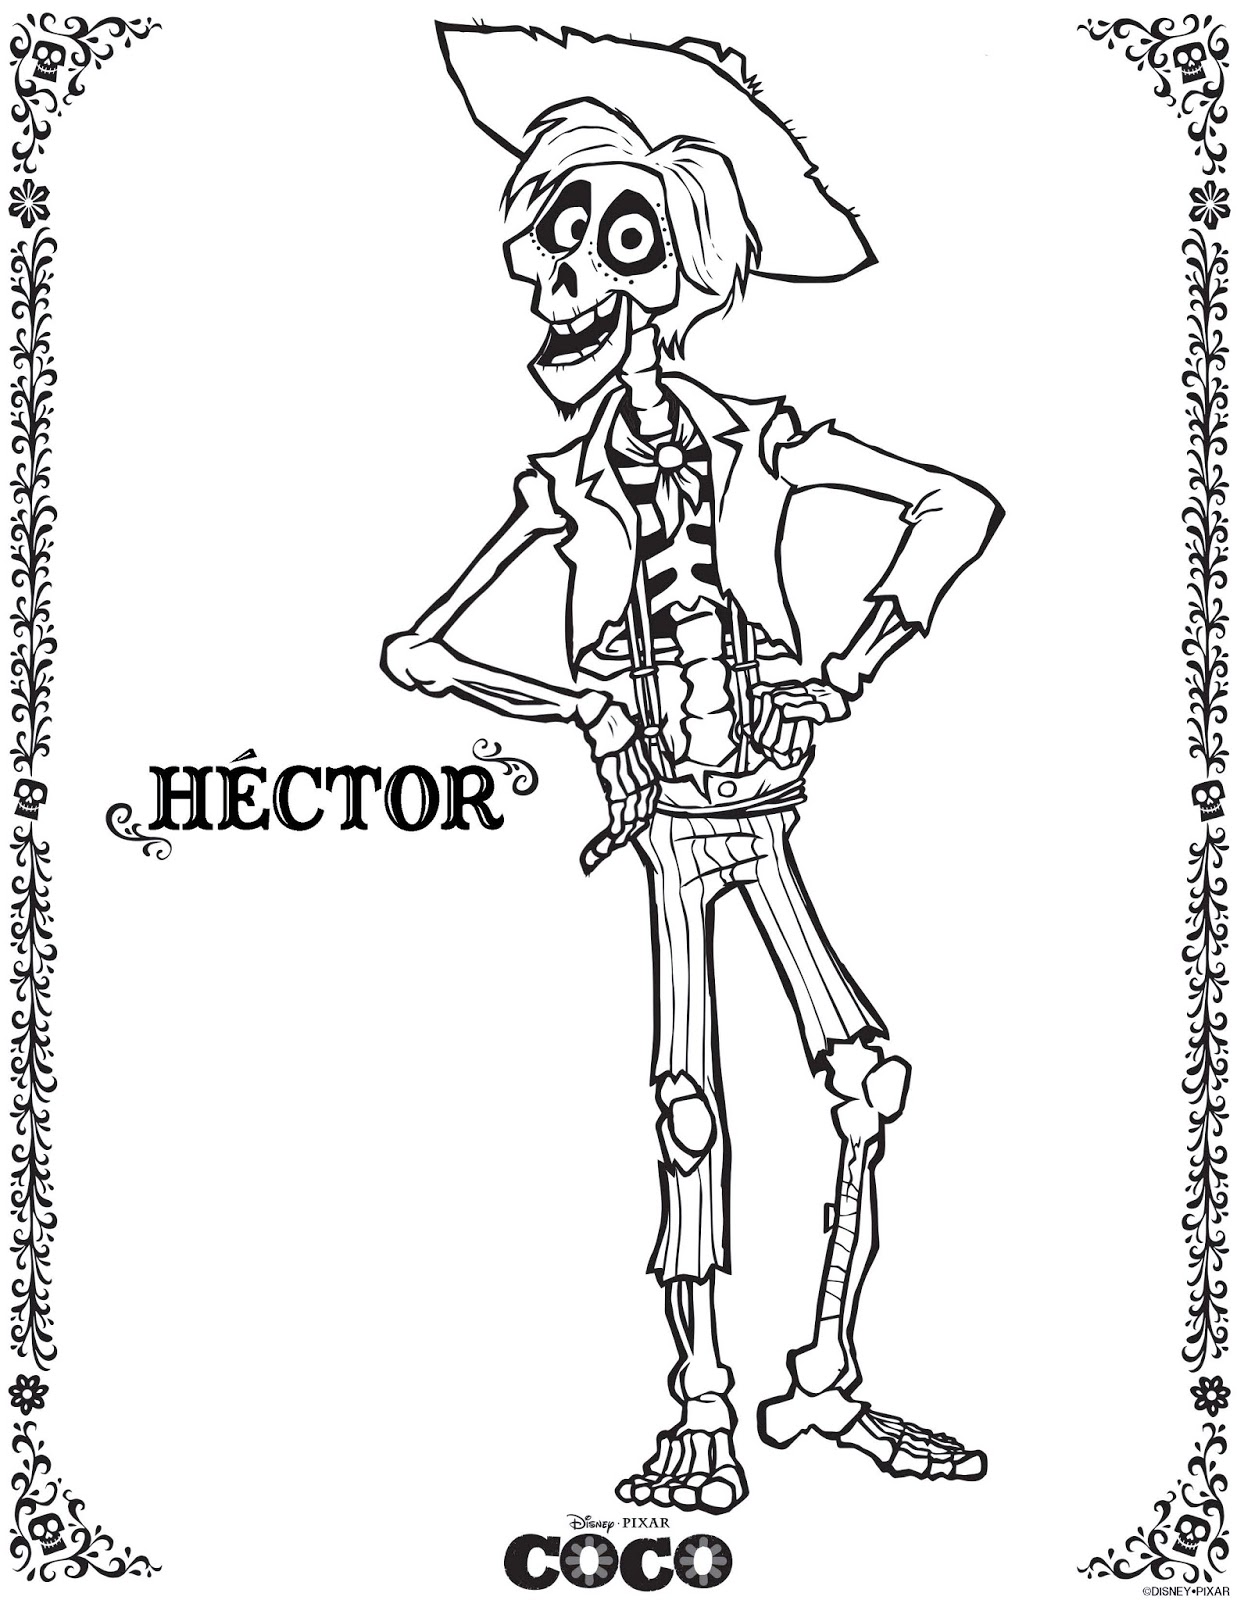 Coco imagem para imprimir e colorir: Hector